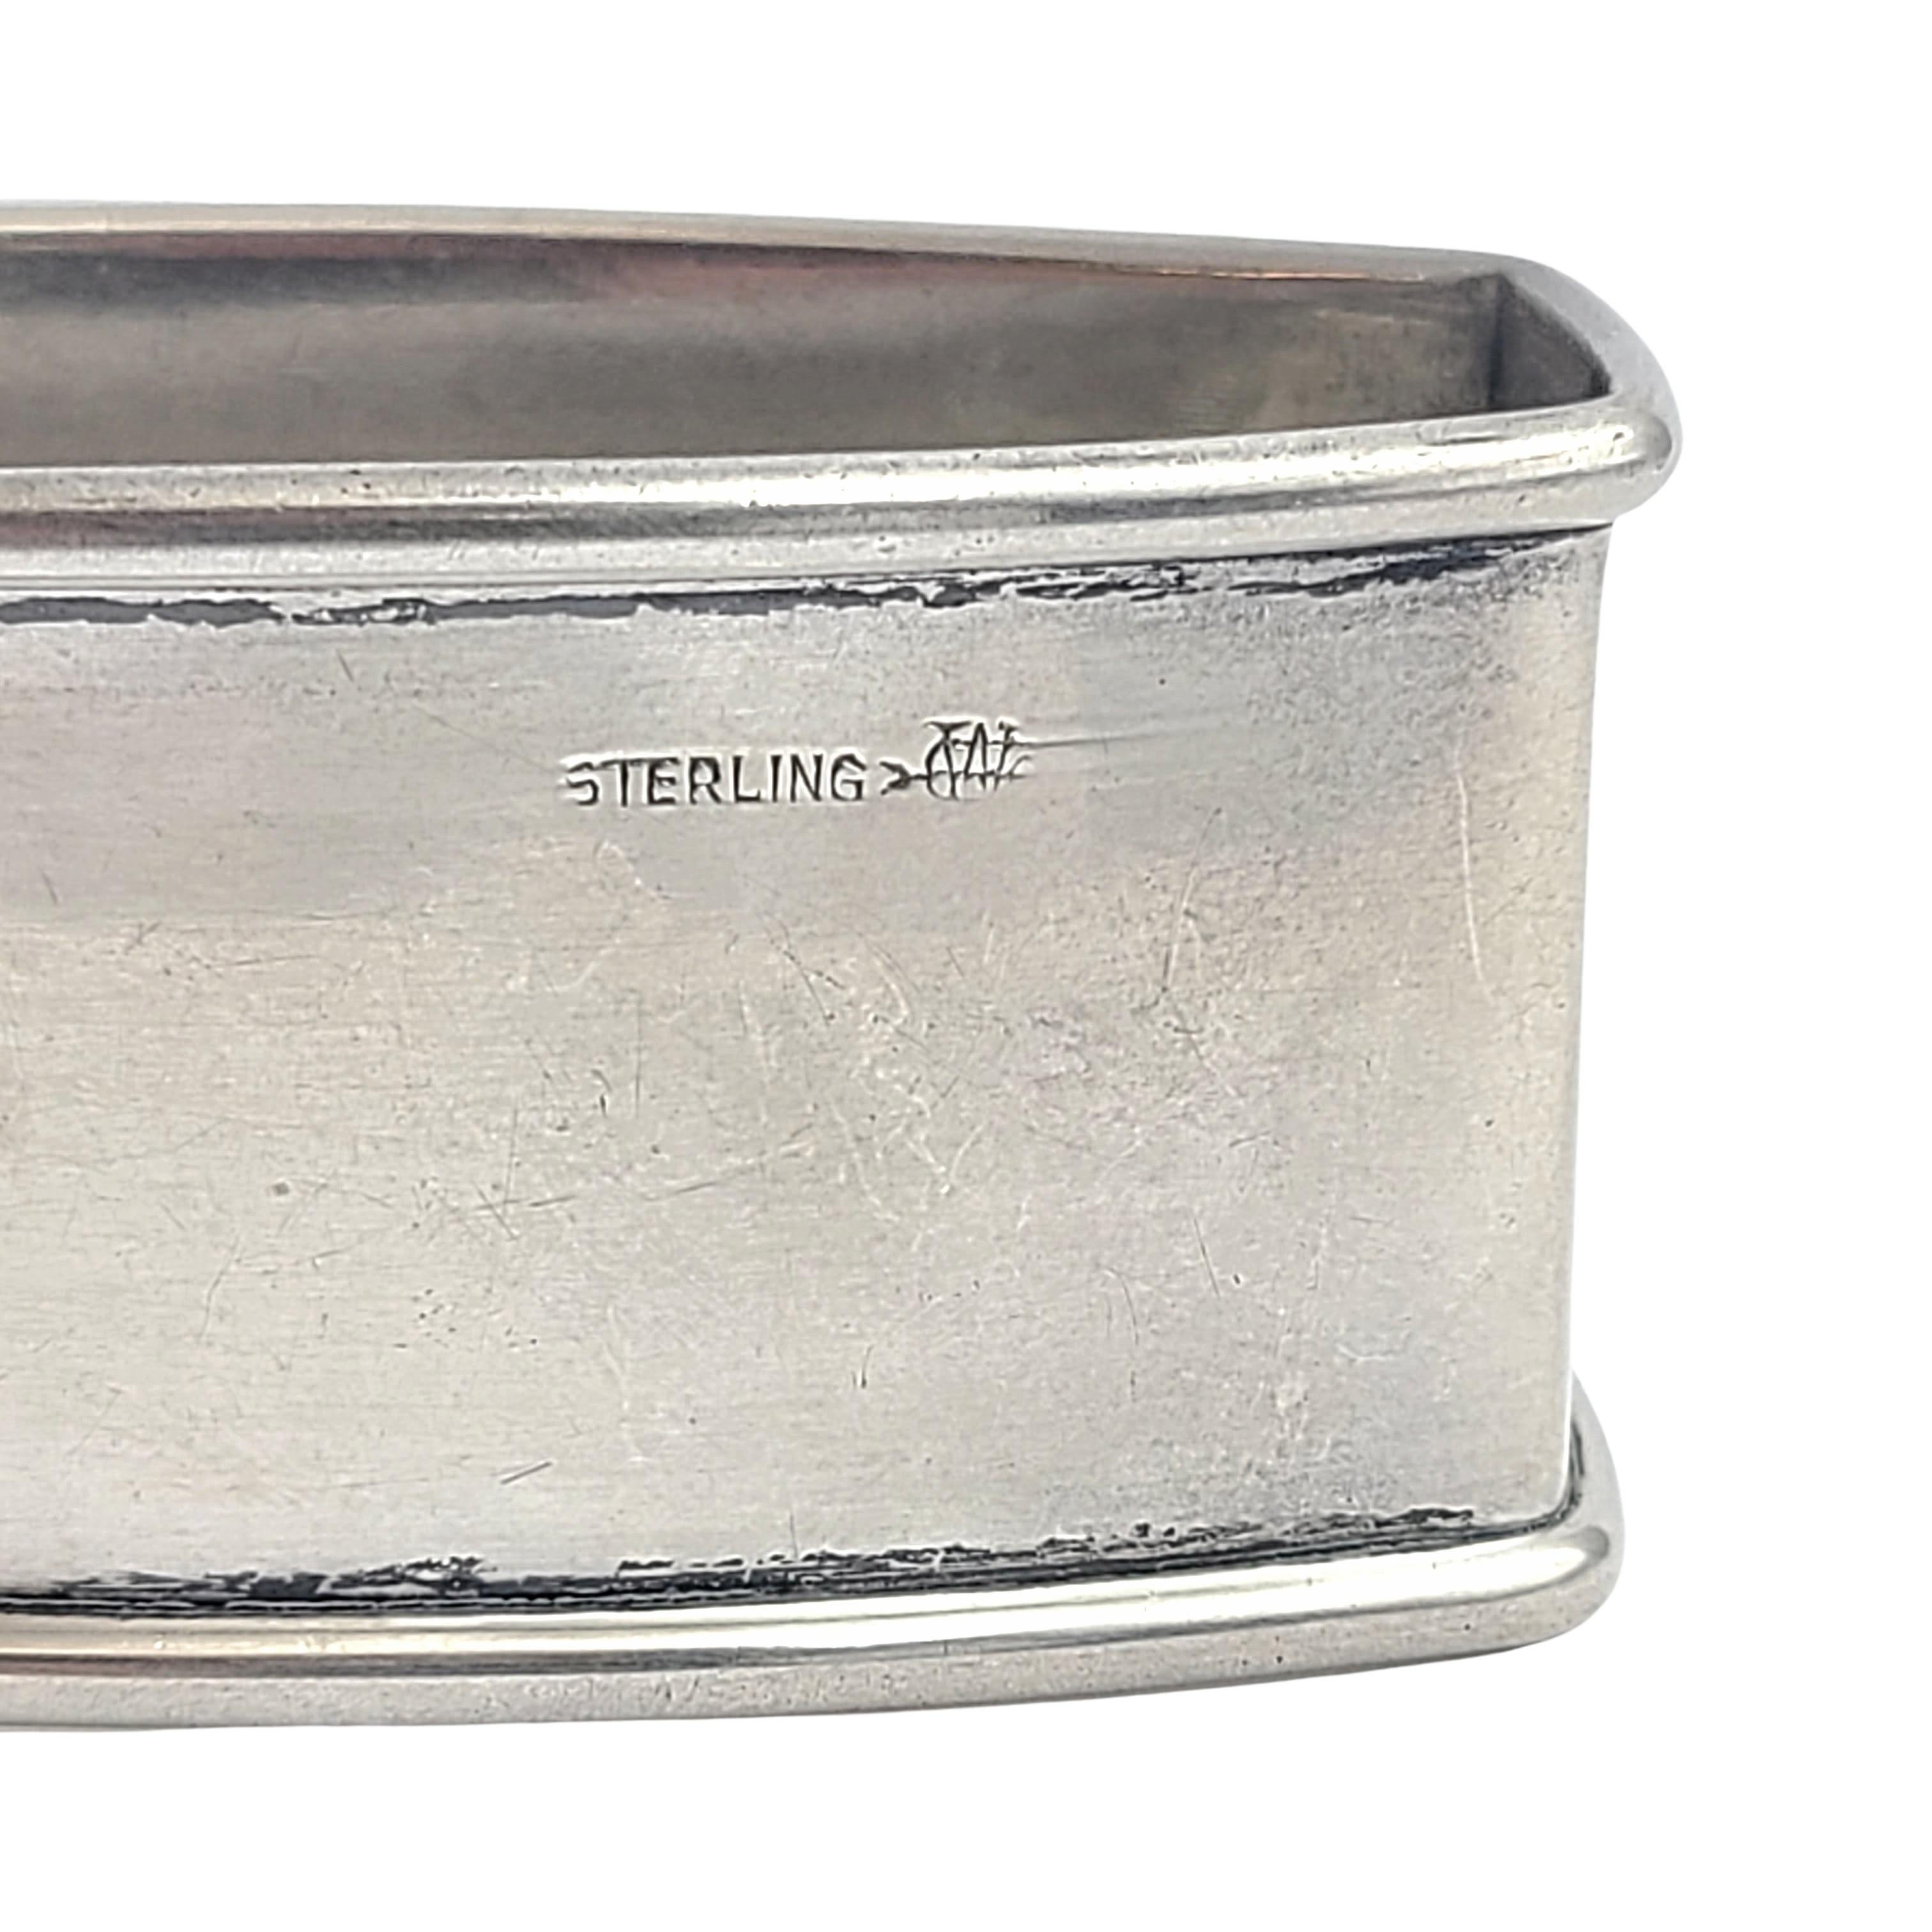 Webster Sterling Silver Enamel Child's Napkin Ring with Monogram #12342 For Sale 3